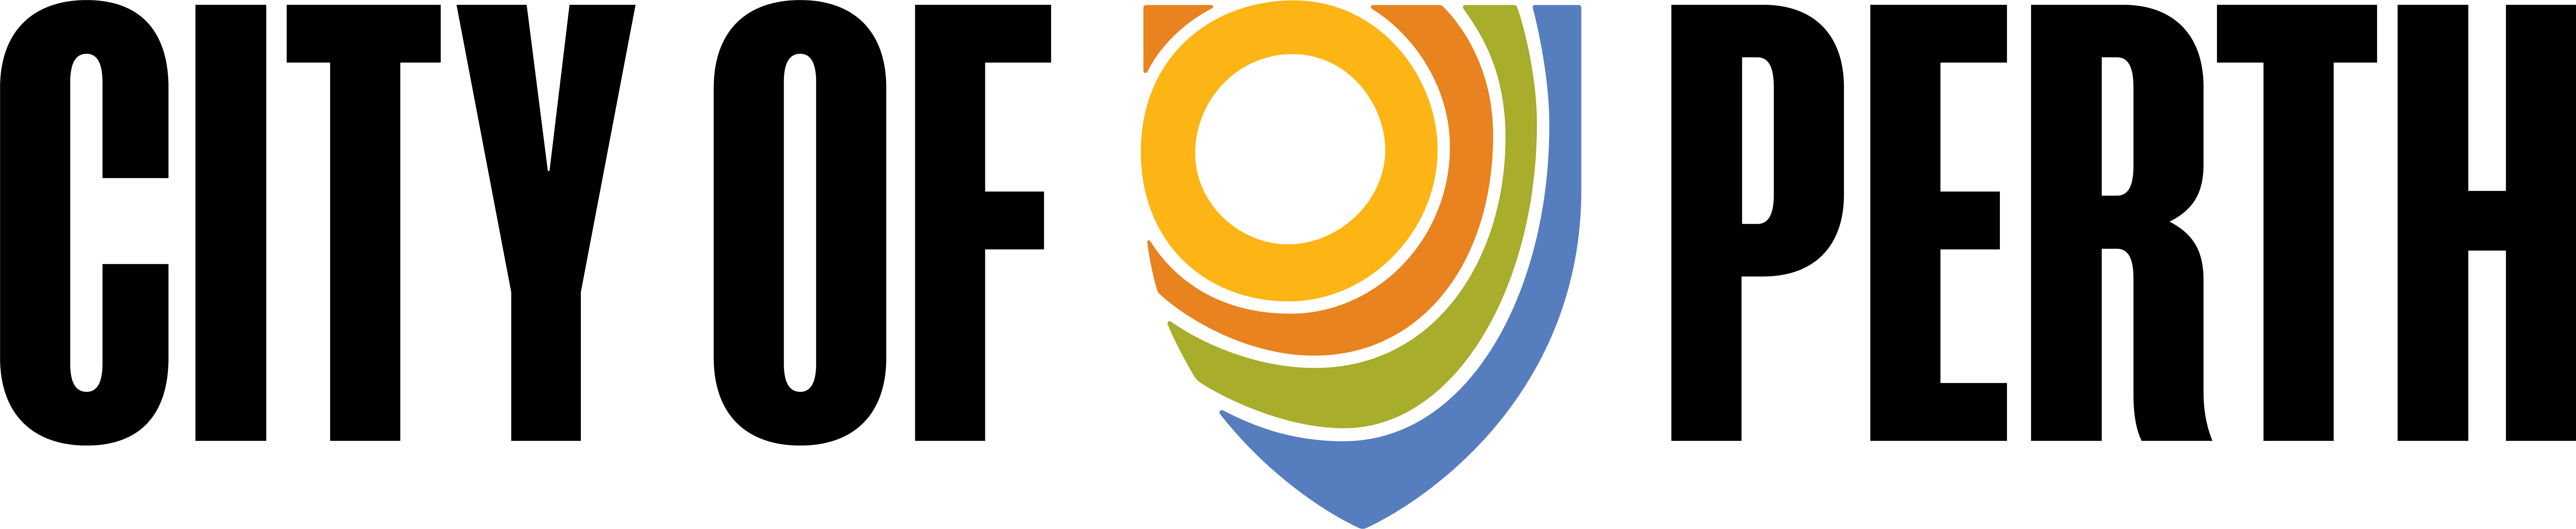 City of Perth Logo